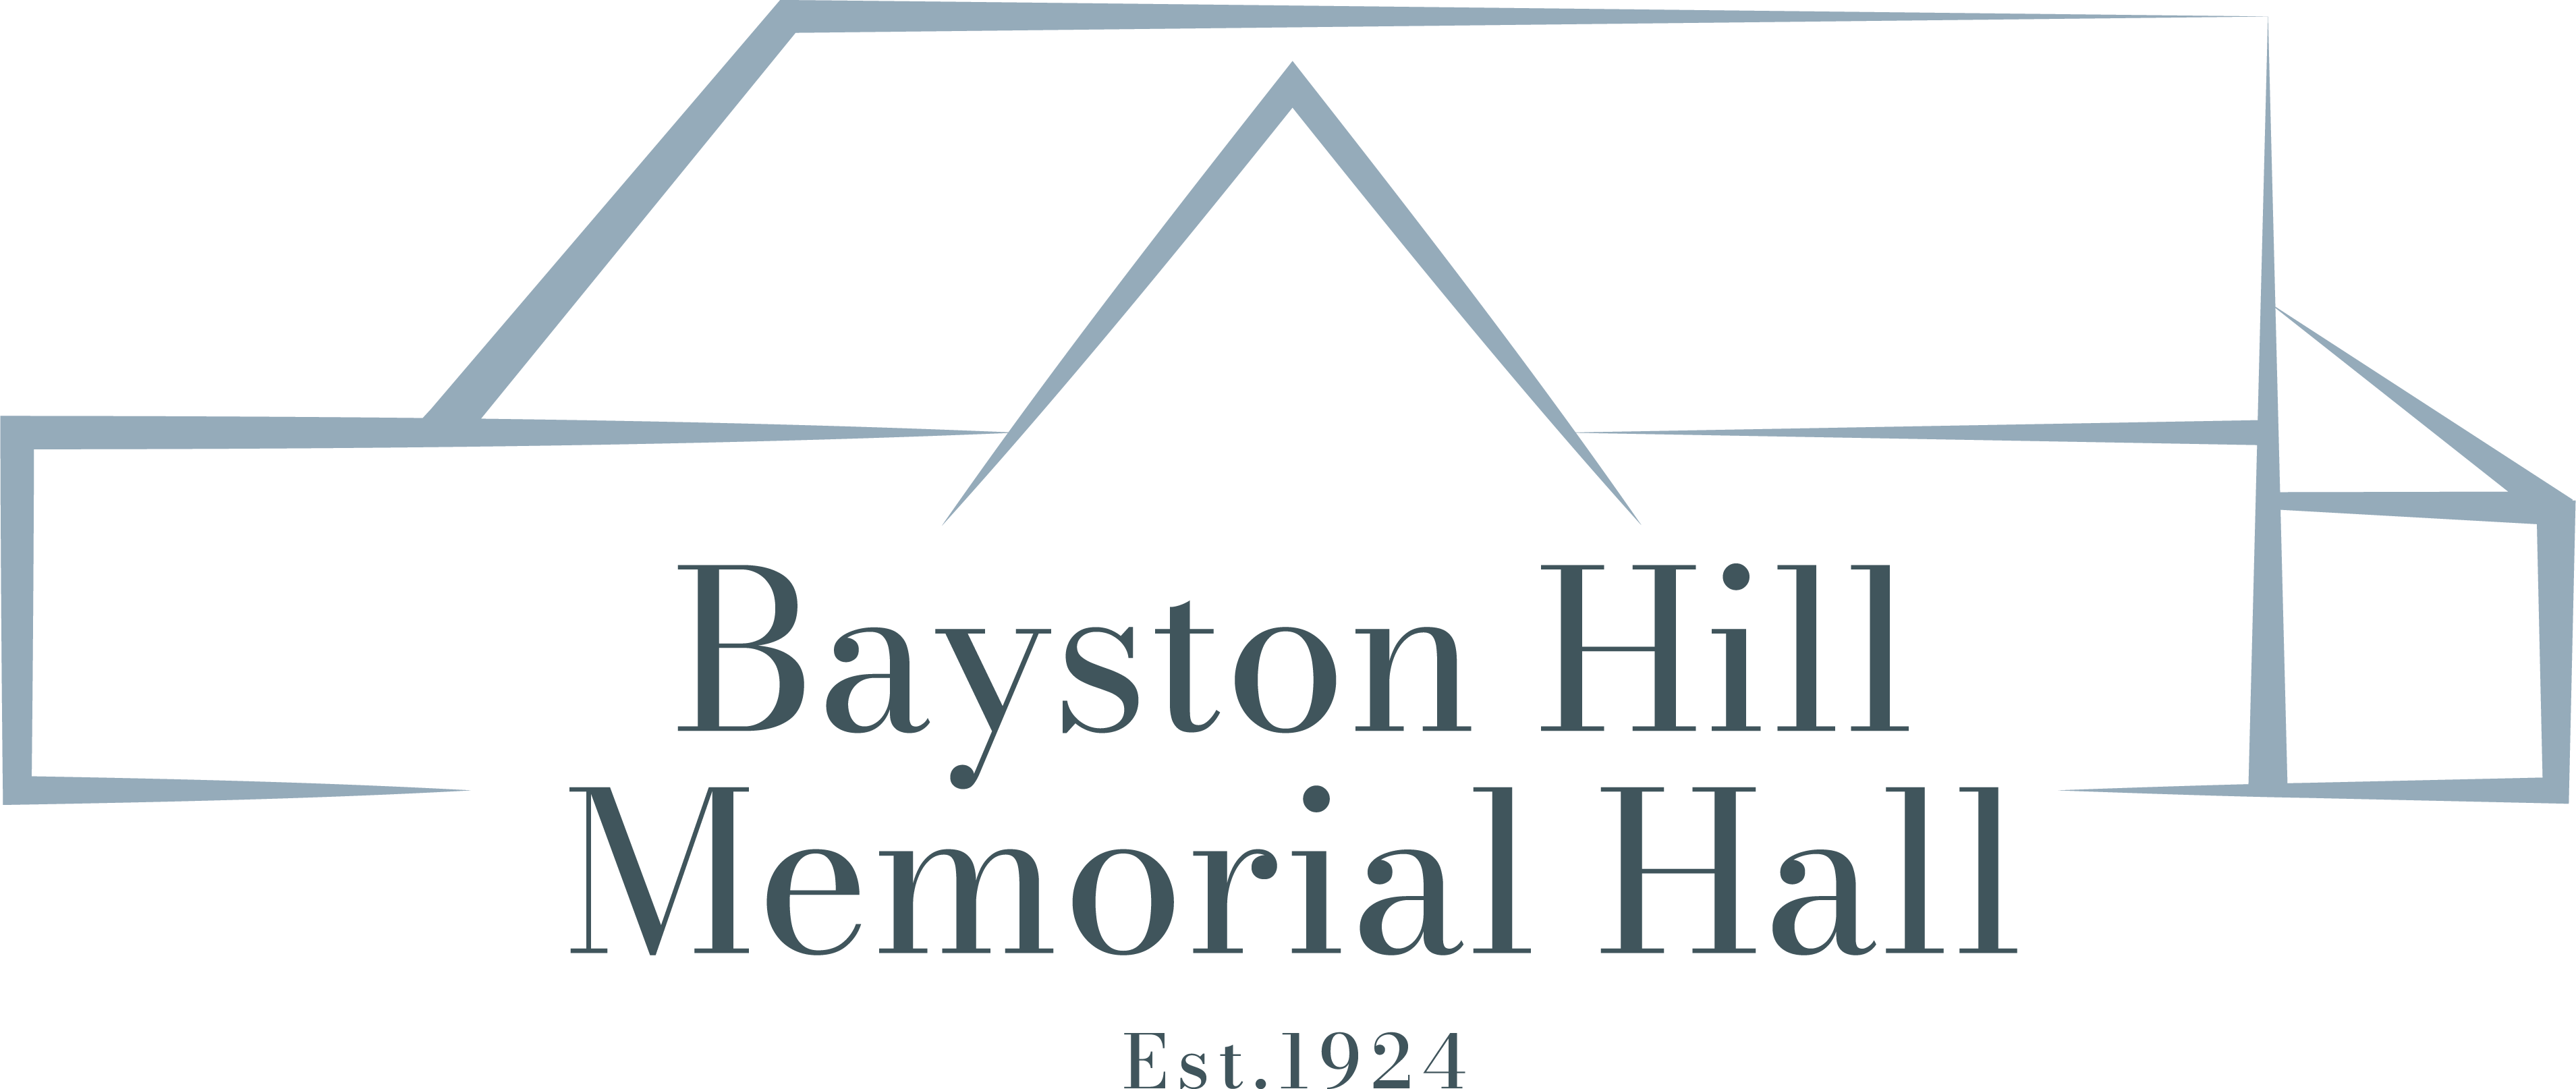 Bayston Hill Memorial Hall